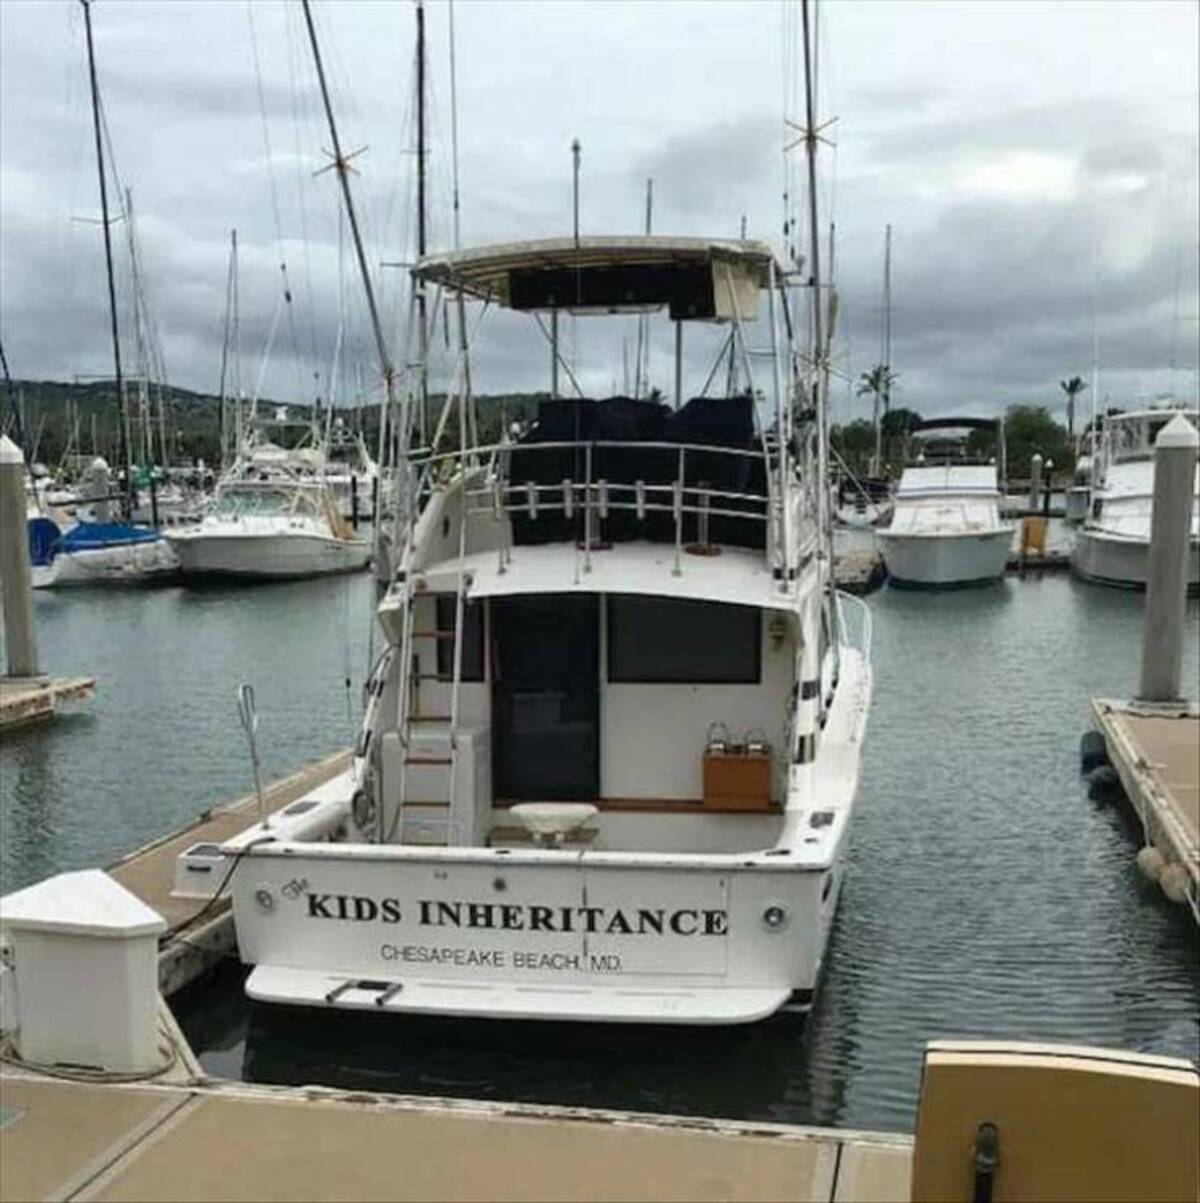 dad joke boat names - Kids Inheritance Chesapeake Beach, Md